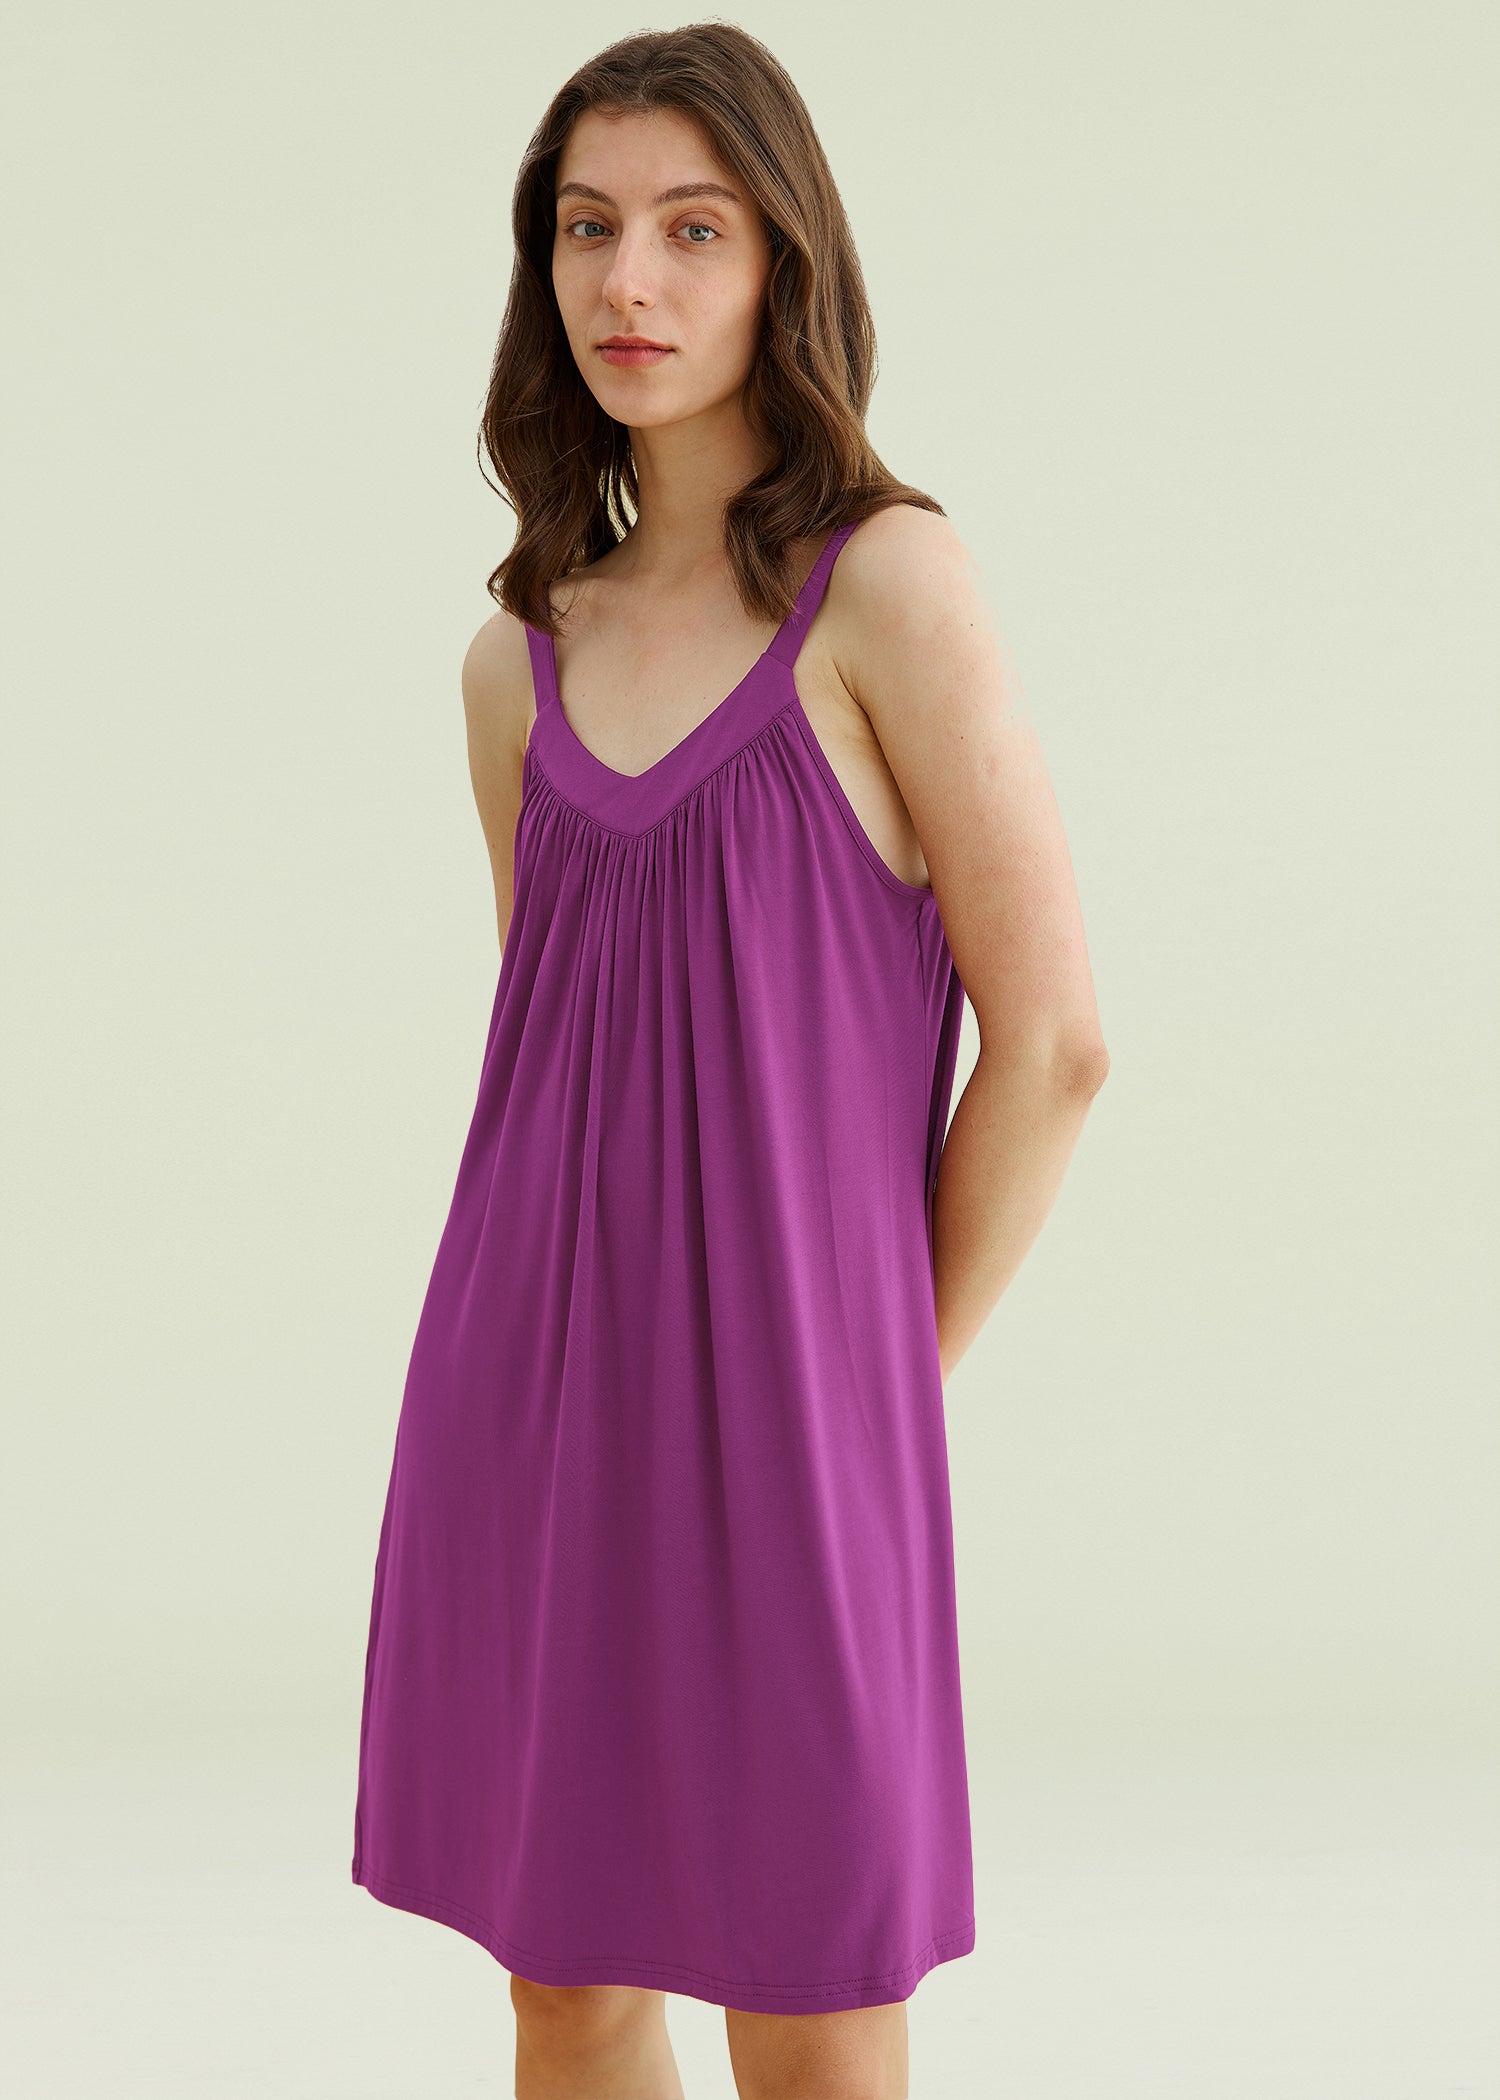 Sexy Dance Ladies Sleep Dress Sleeveless Nightgowns Lace Trim Pajama Soft  Chemise V Neck Sleepwear Purple M 